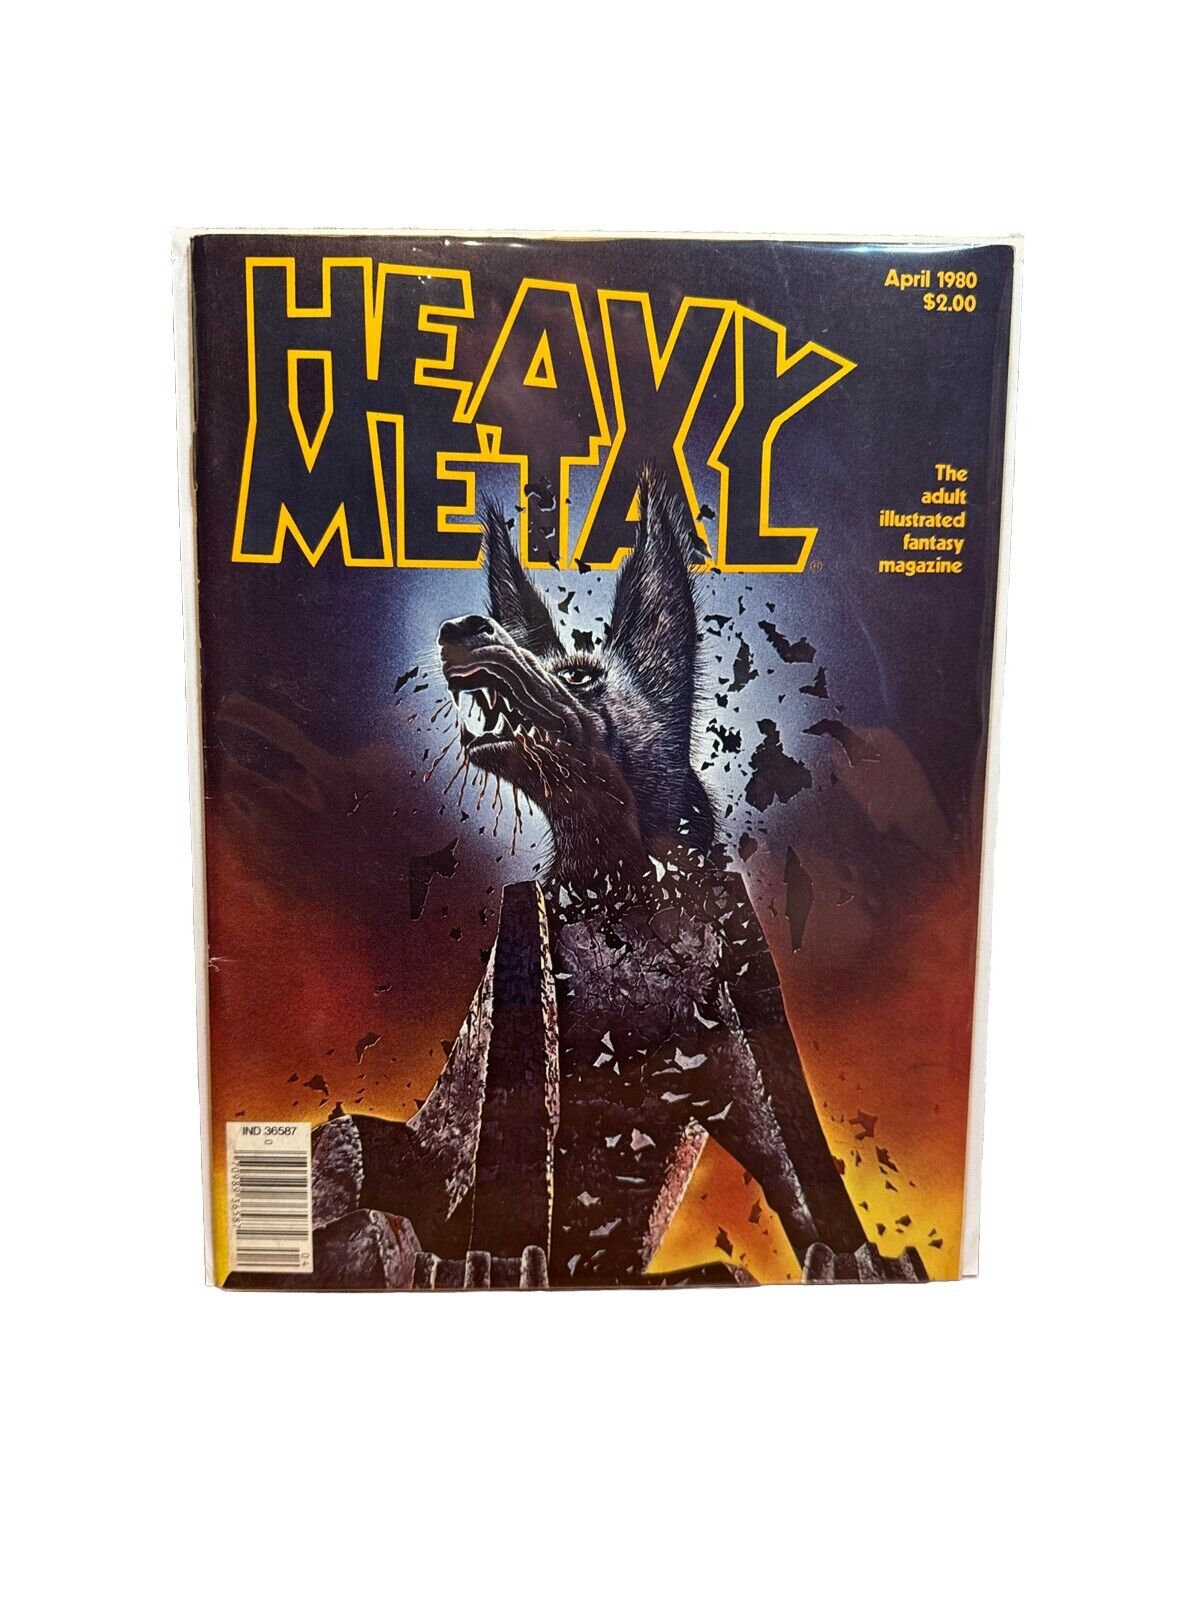 HEAVY METAL #37, VG-, April 1977 1980, Richard Corben, Moebius, more in store